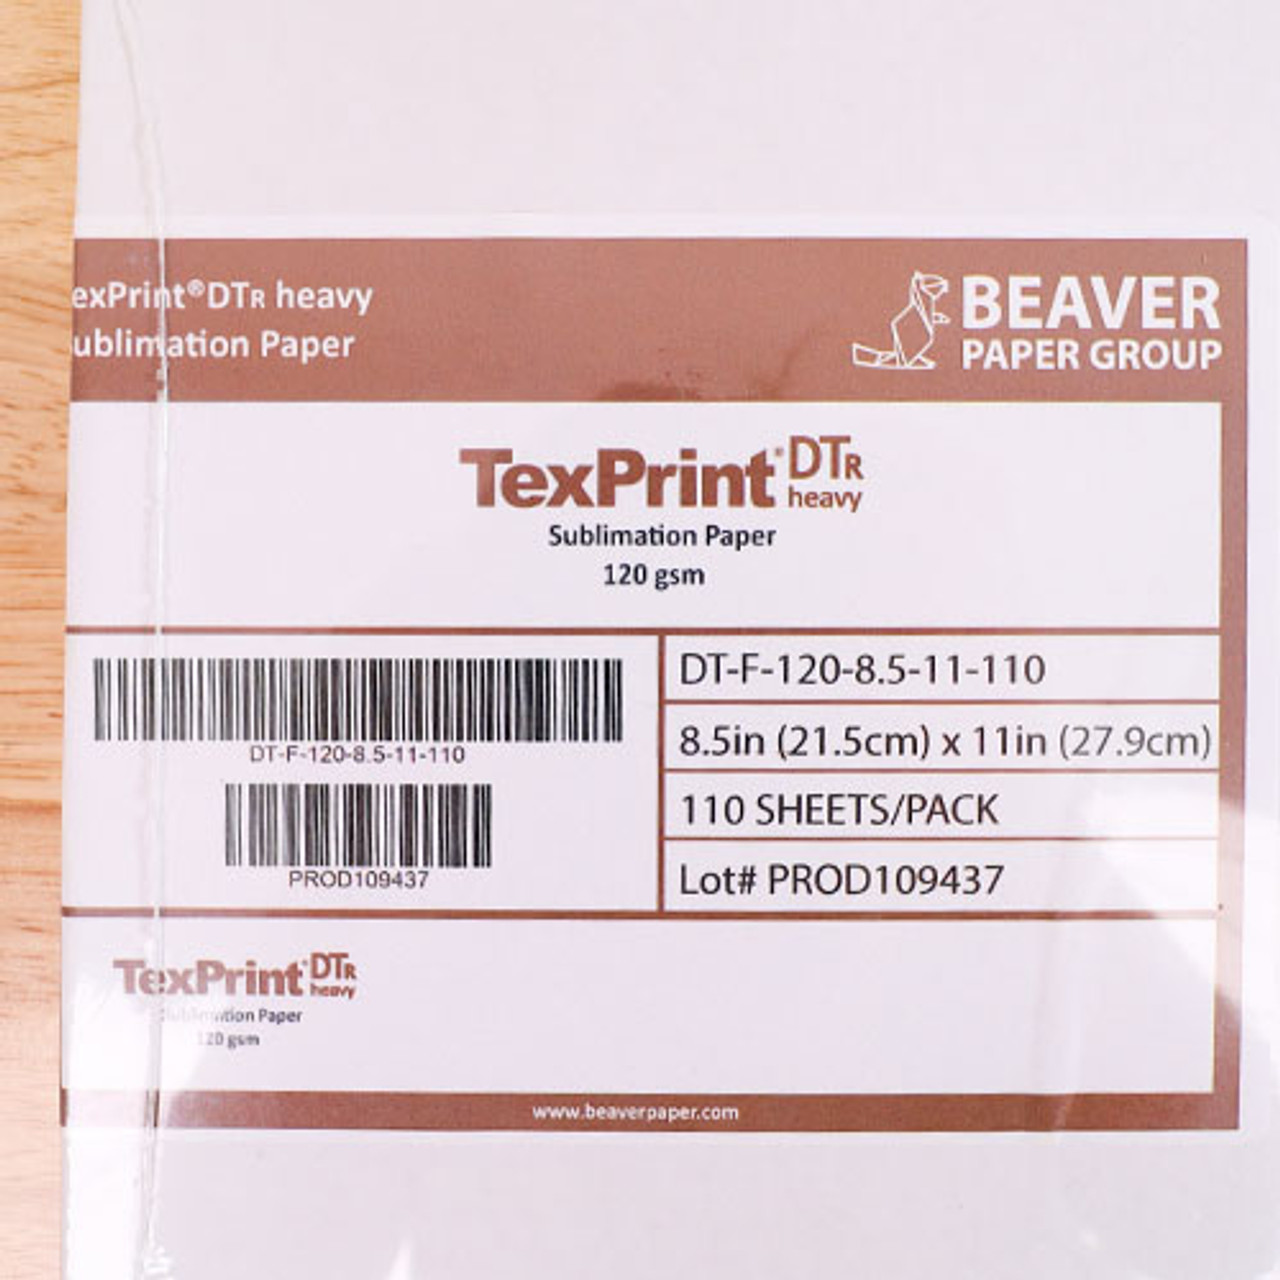 TexPrint R for Ricoh Sublimation Printers 11 x 17 (110 Sheets)